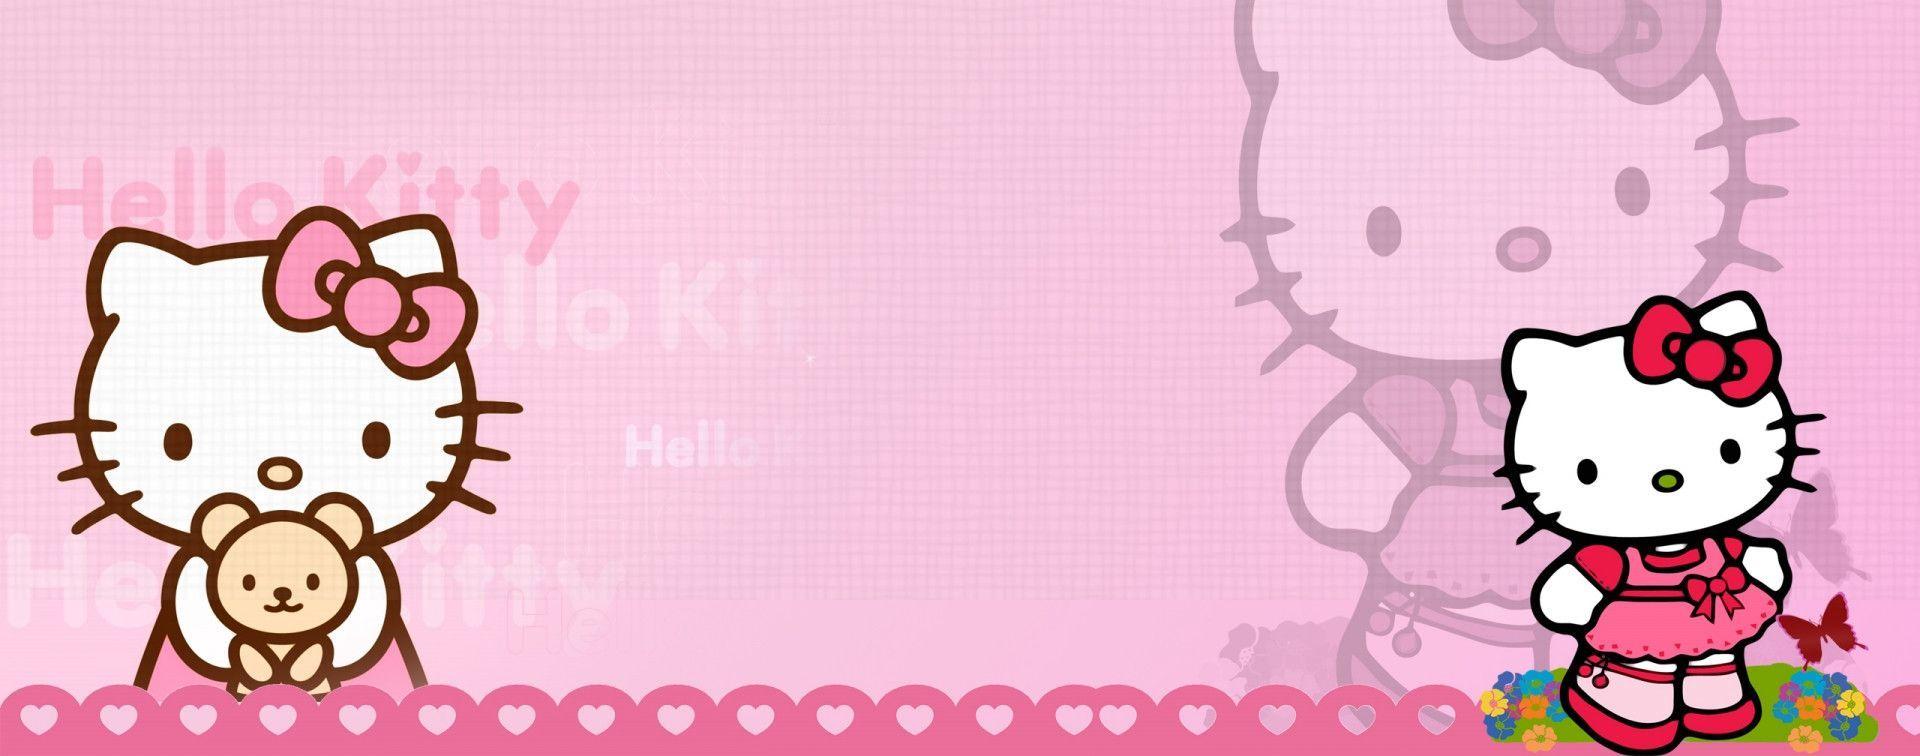 Hello kitty cartoon wallpaper background HD desktop wallpaper